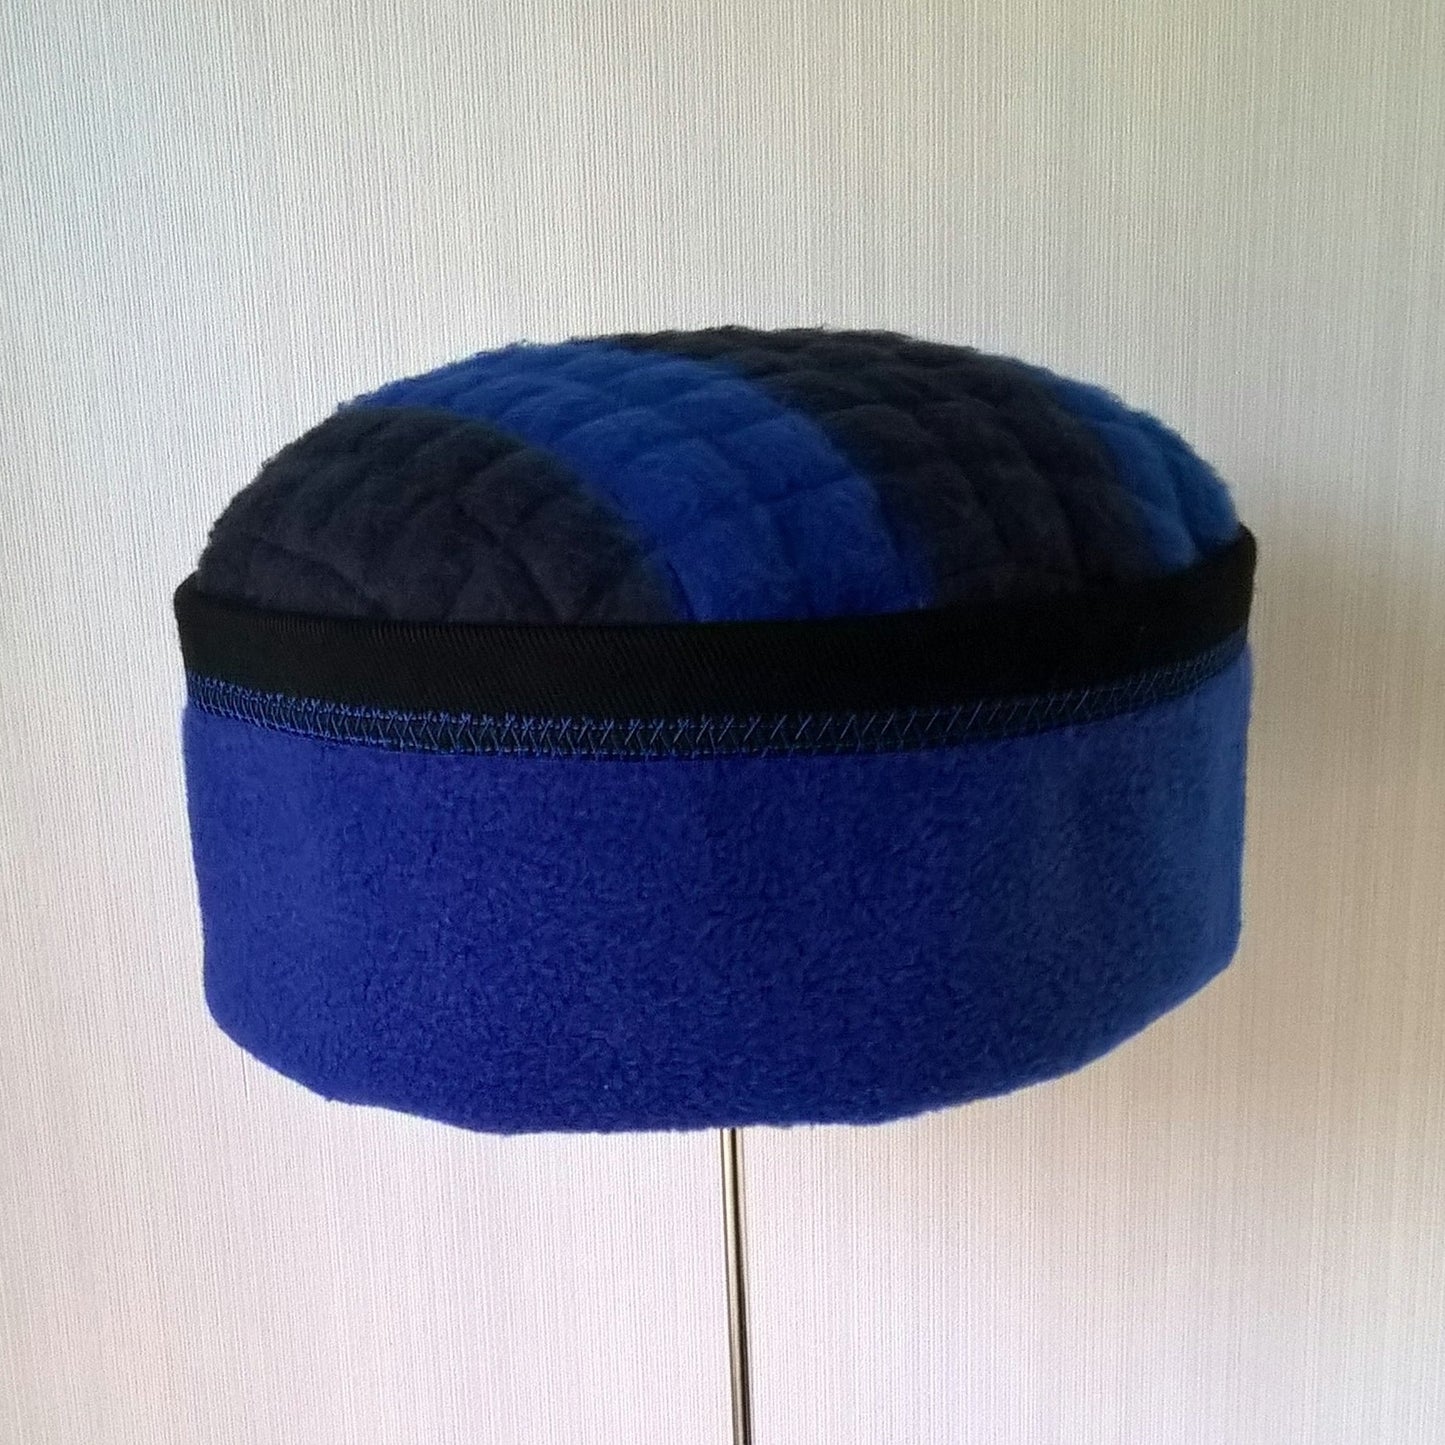 Blue and black handmade fleece cap